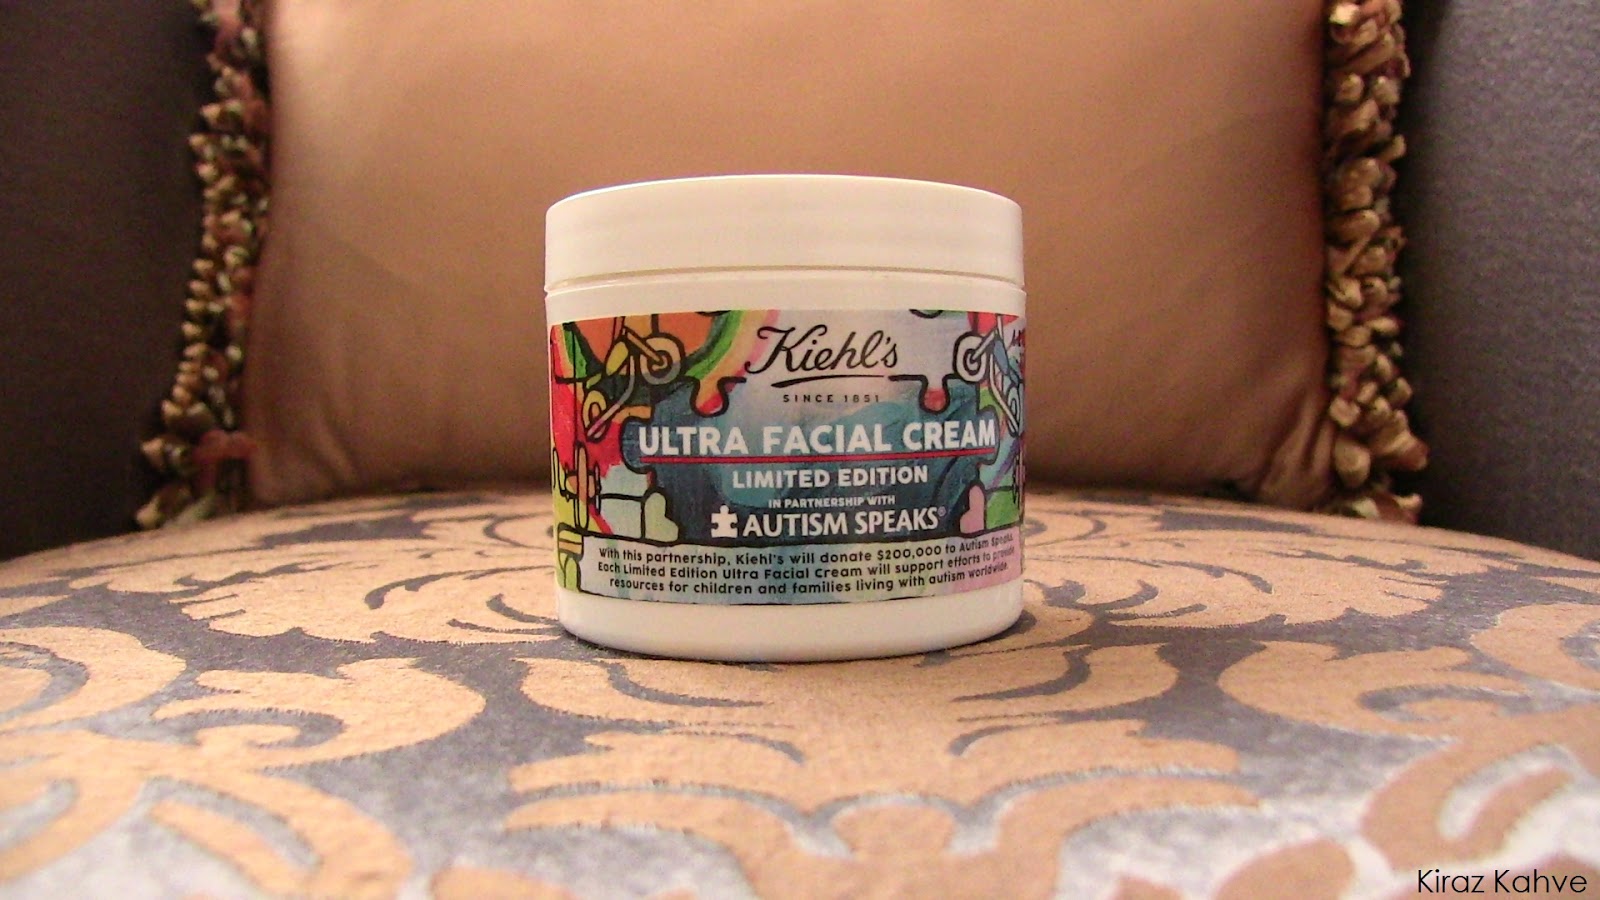 kiehl's ultra facial cream